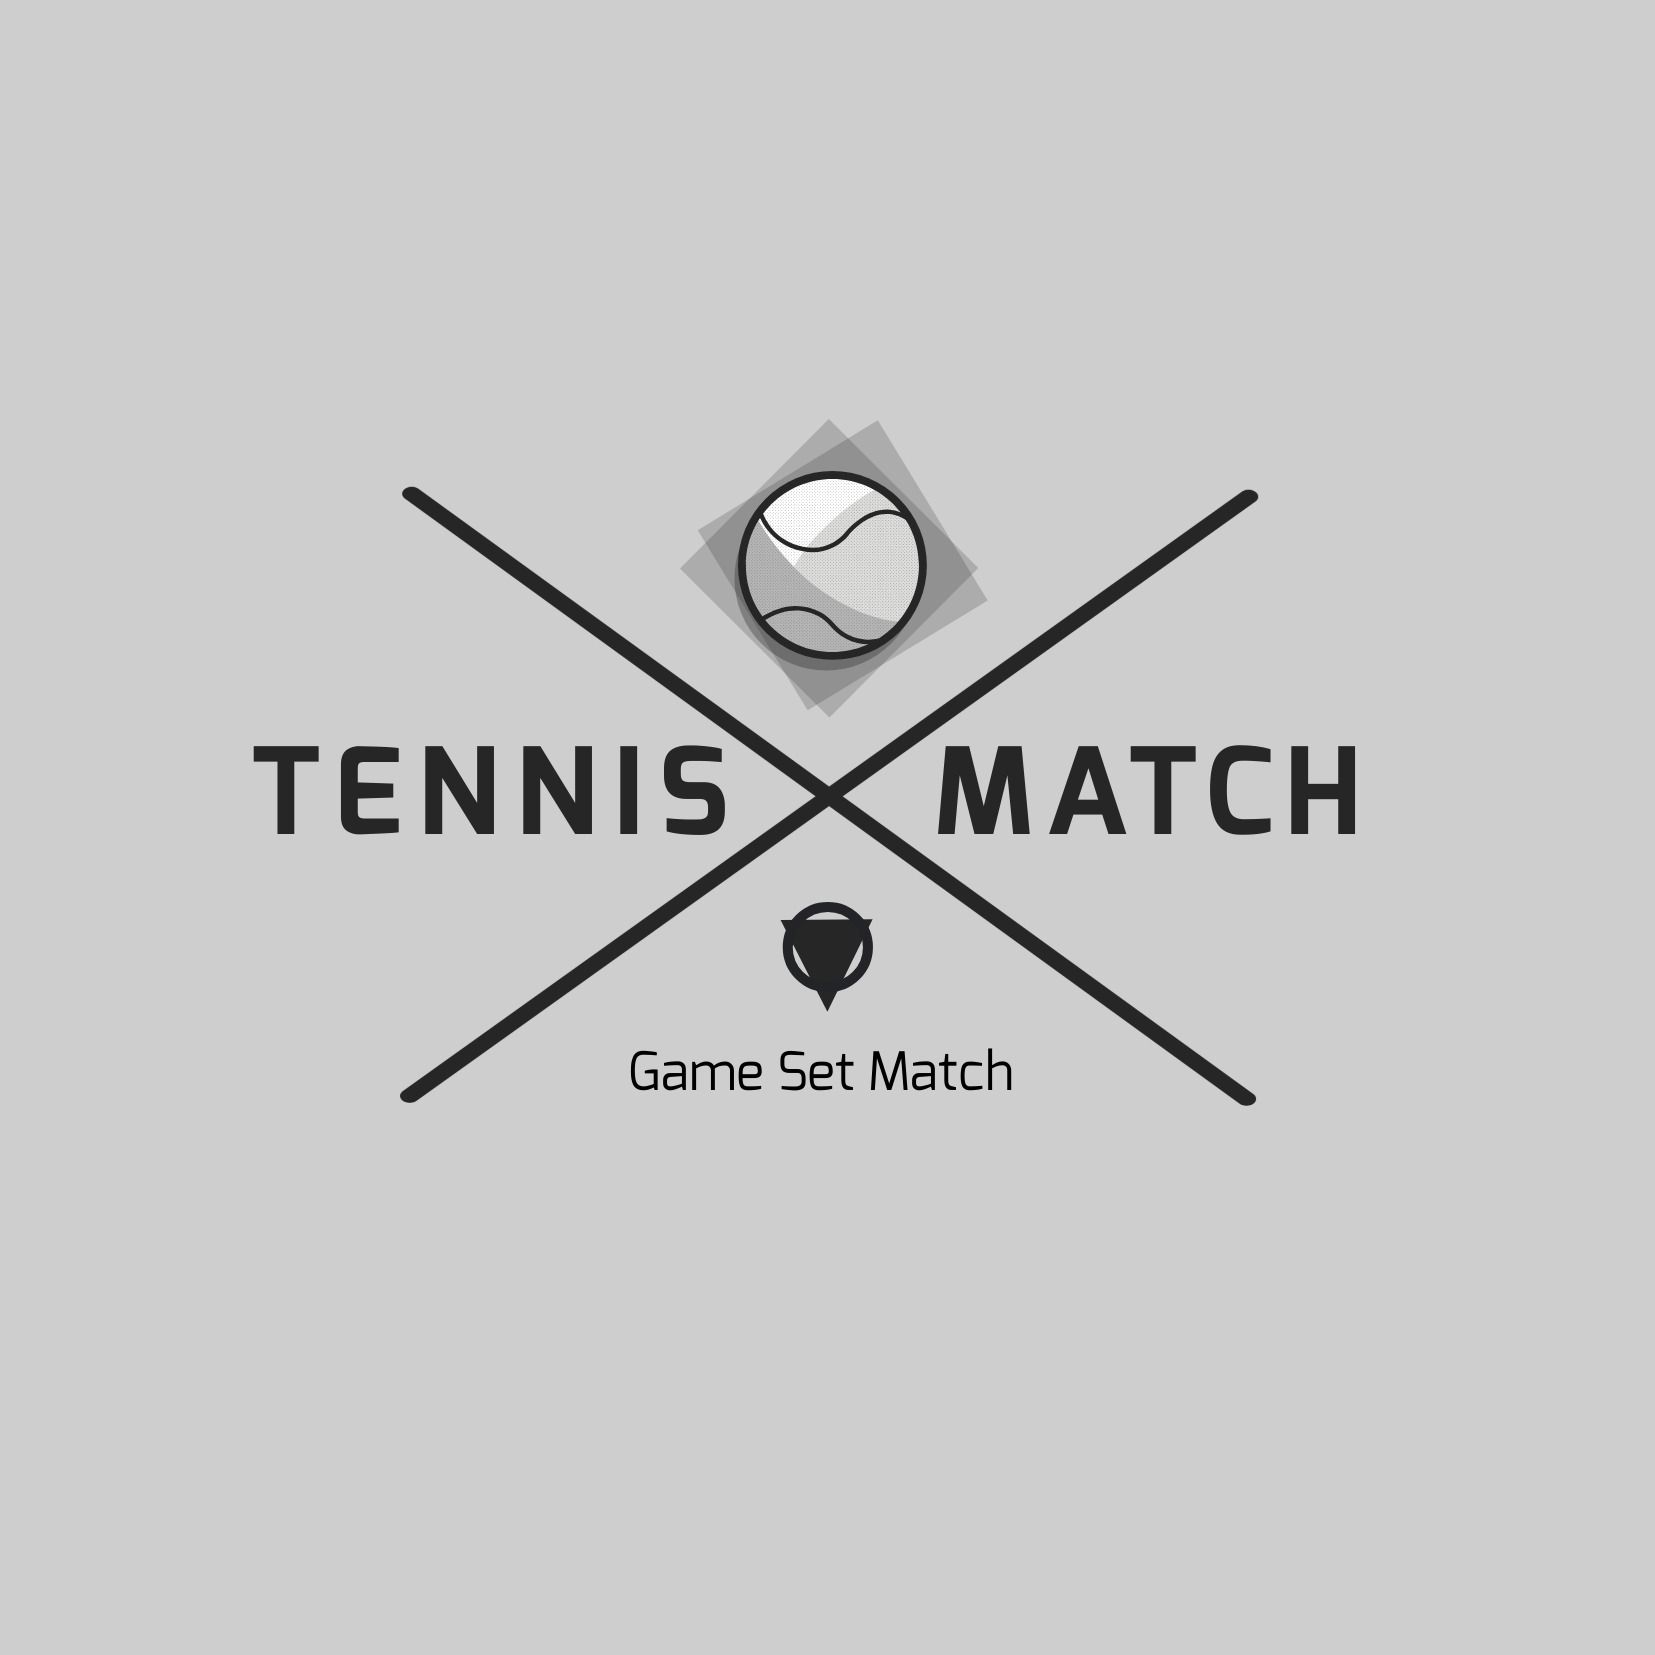 Tennis match logo - Exo is a futuristic and elegant font - Image